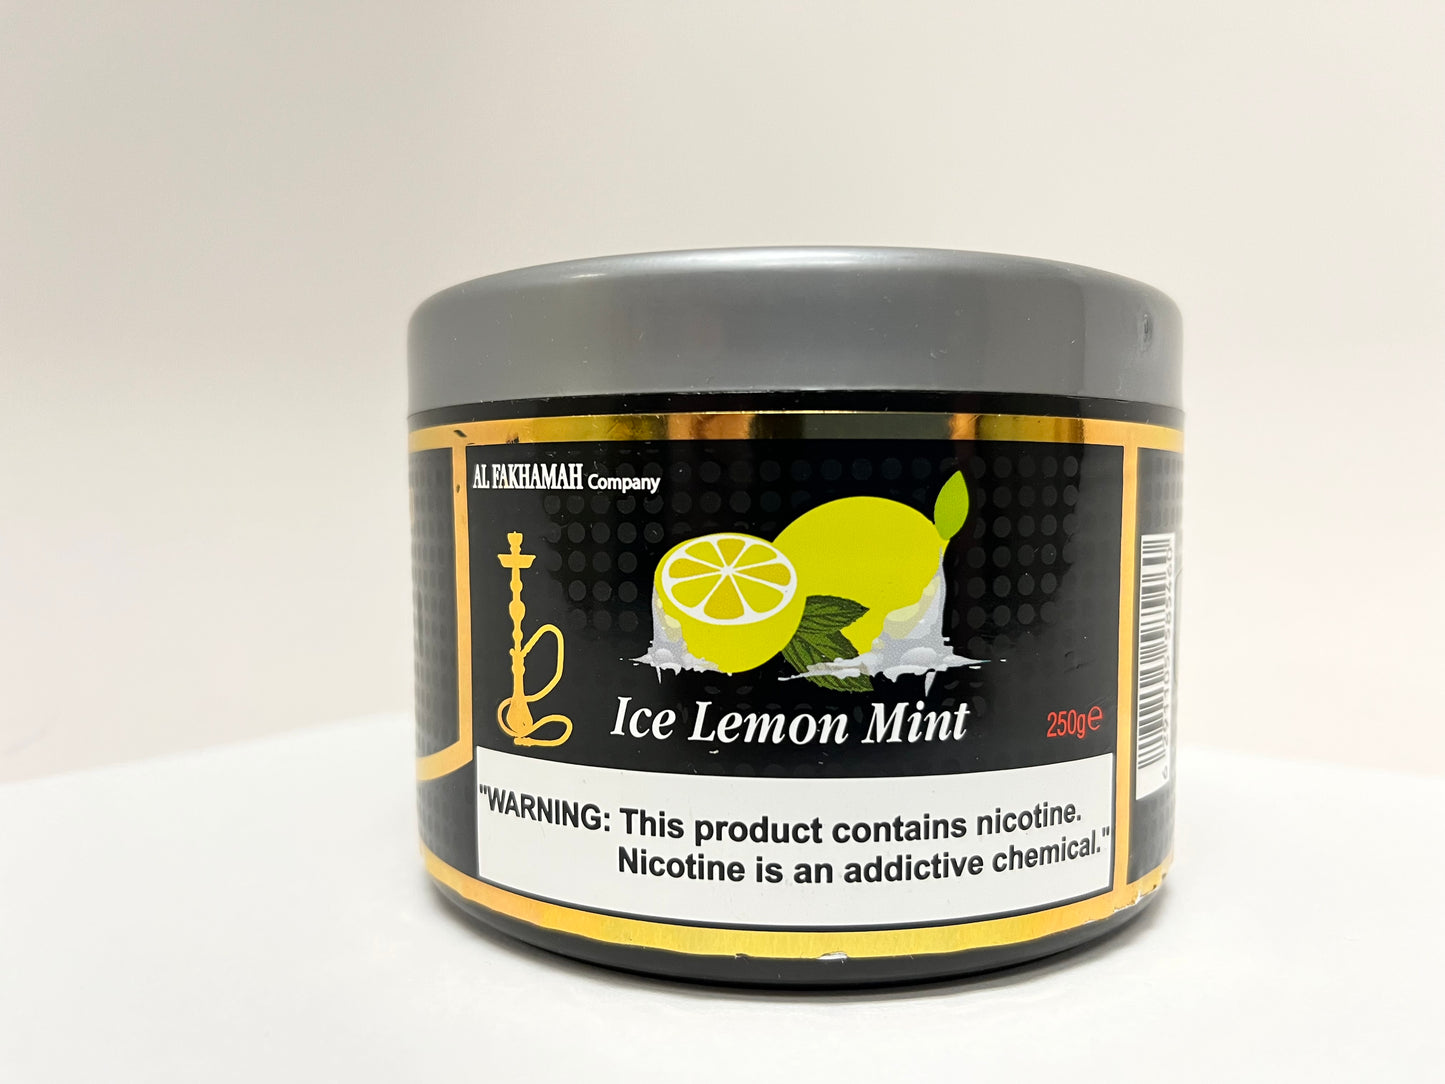 Al Fakhamah Tobacco Ice Lemon Mint